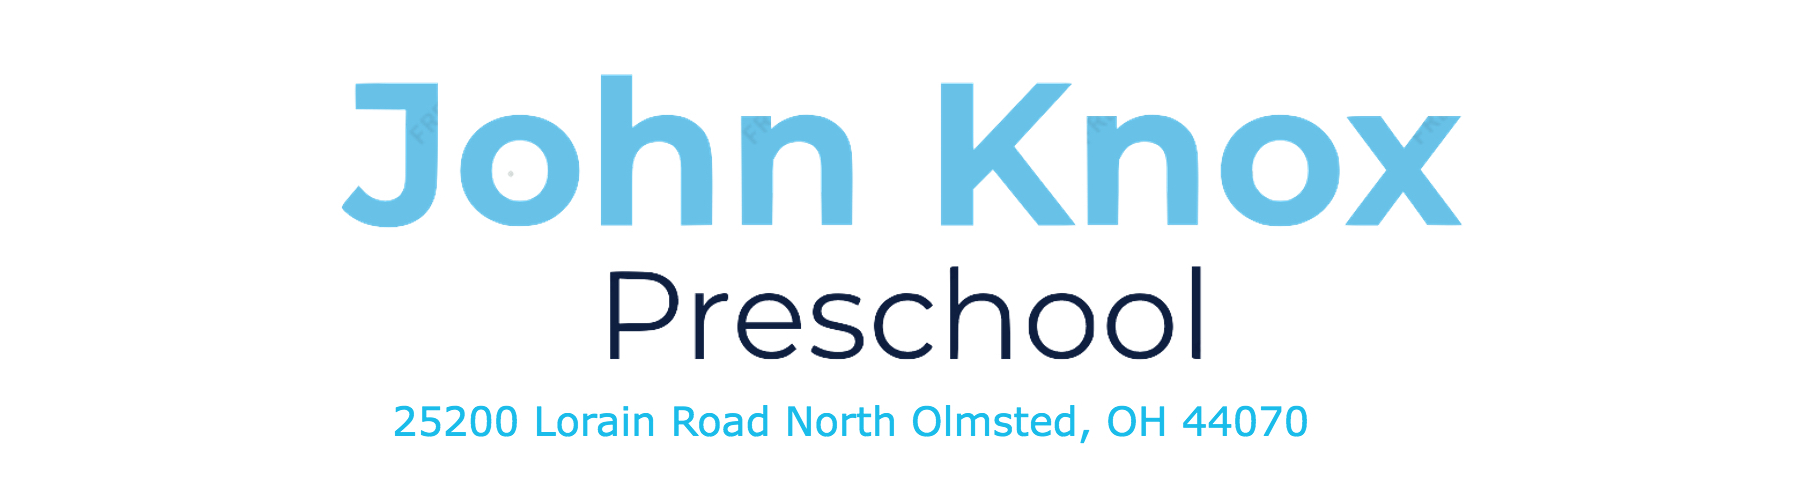 John Knox Preschool